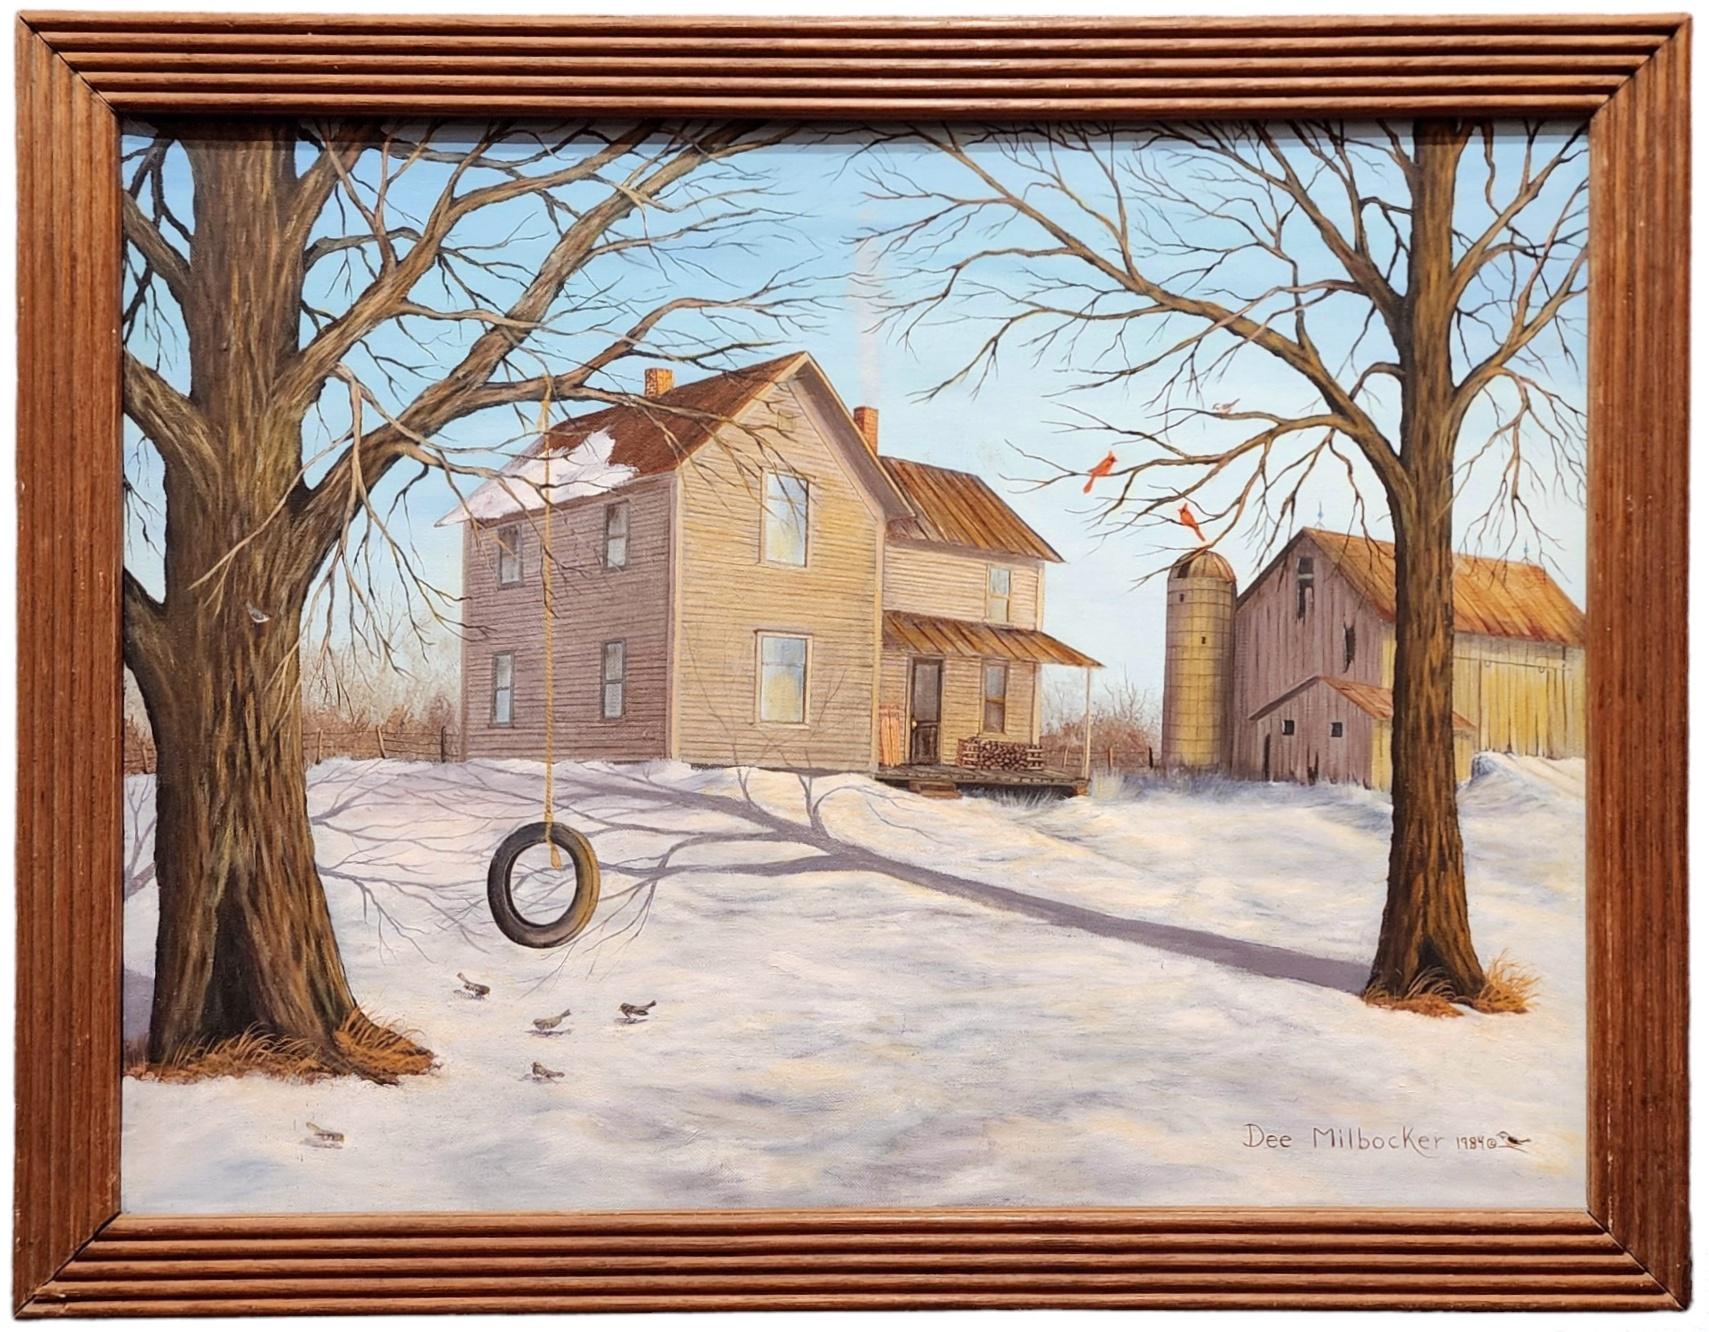 Dee Milbocker Landscape Painting - The Old Farm, Winter Landscape, Michigan Farm, Cardinals, Tire Swing 